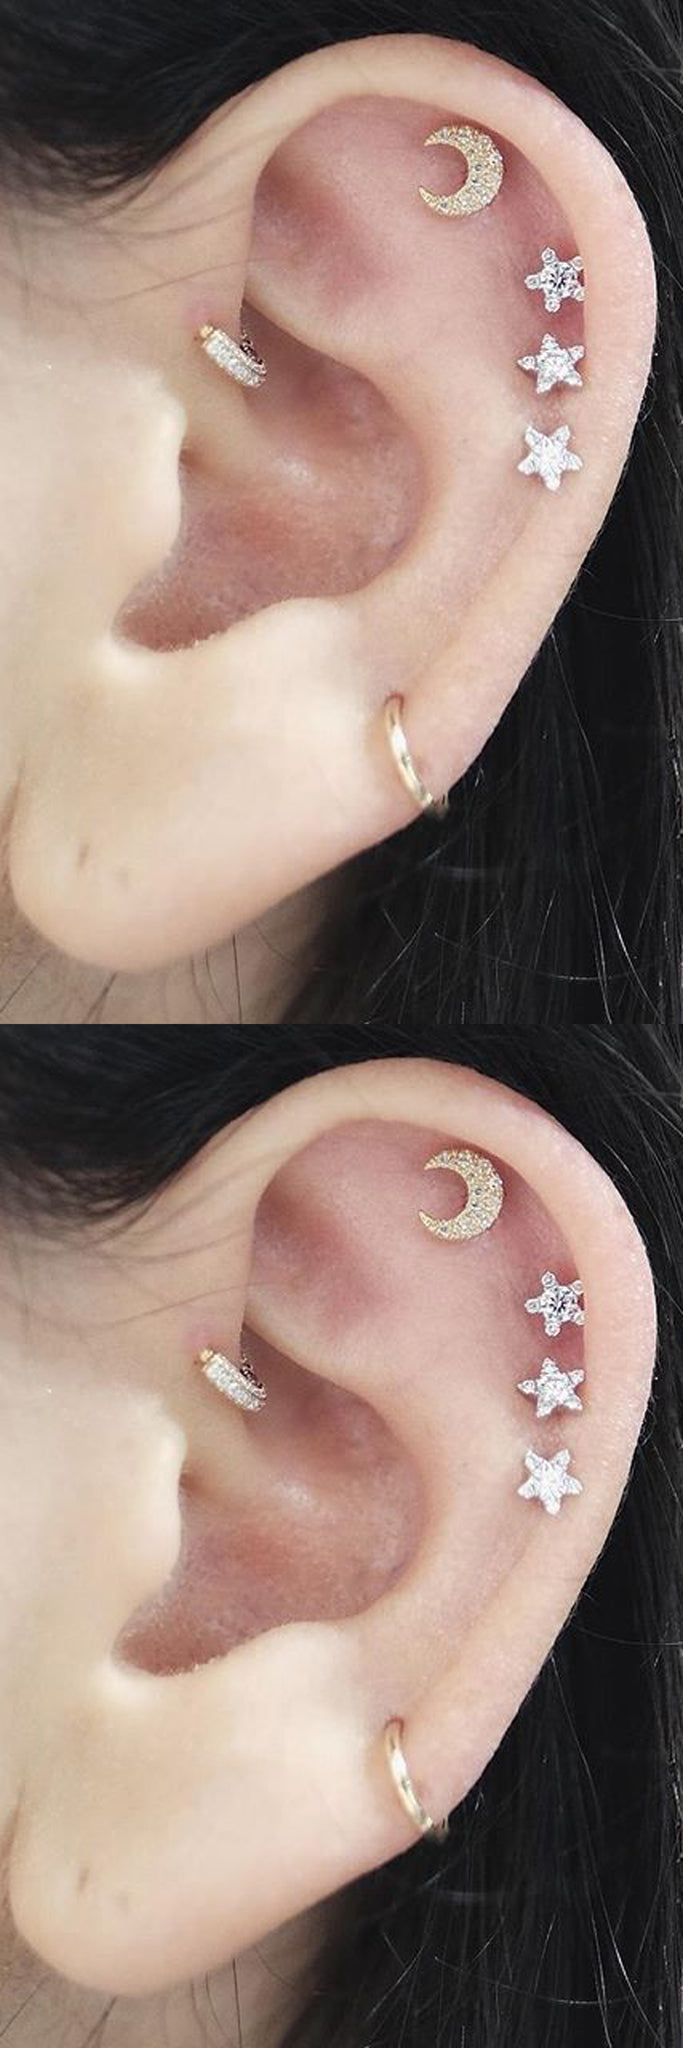 Cute Feminine Multiple Ear Piercing Combination Ideas at MyBodiArt.com - Crescent Moon and Stars Sky Cartilage Helix Earring Studs  